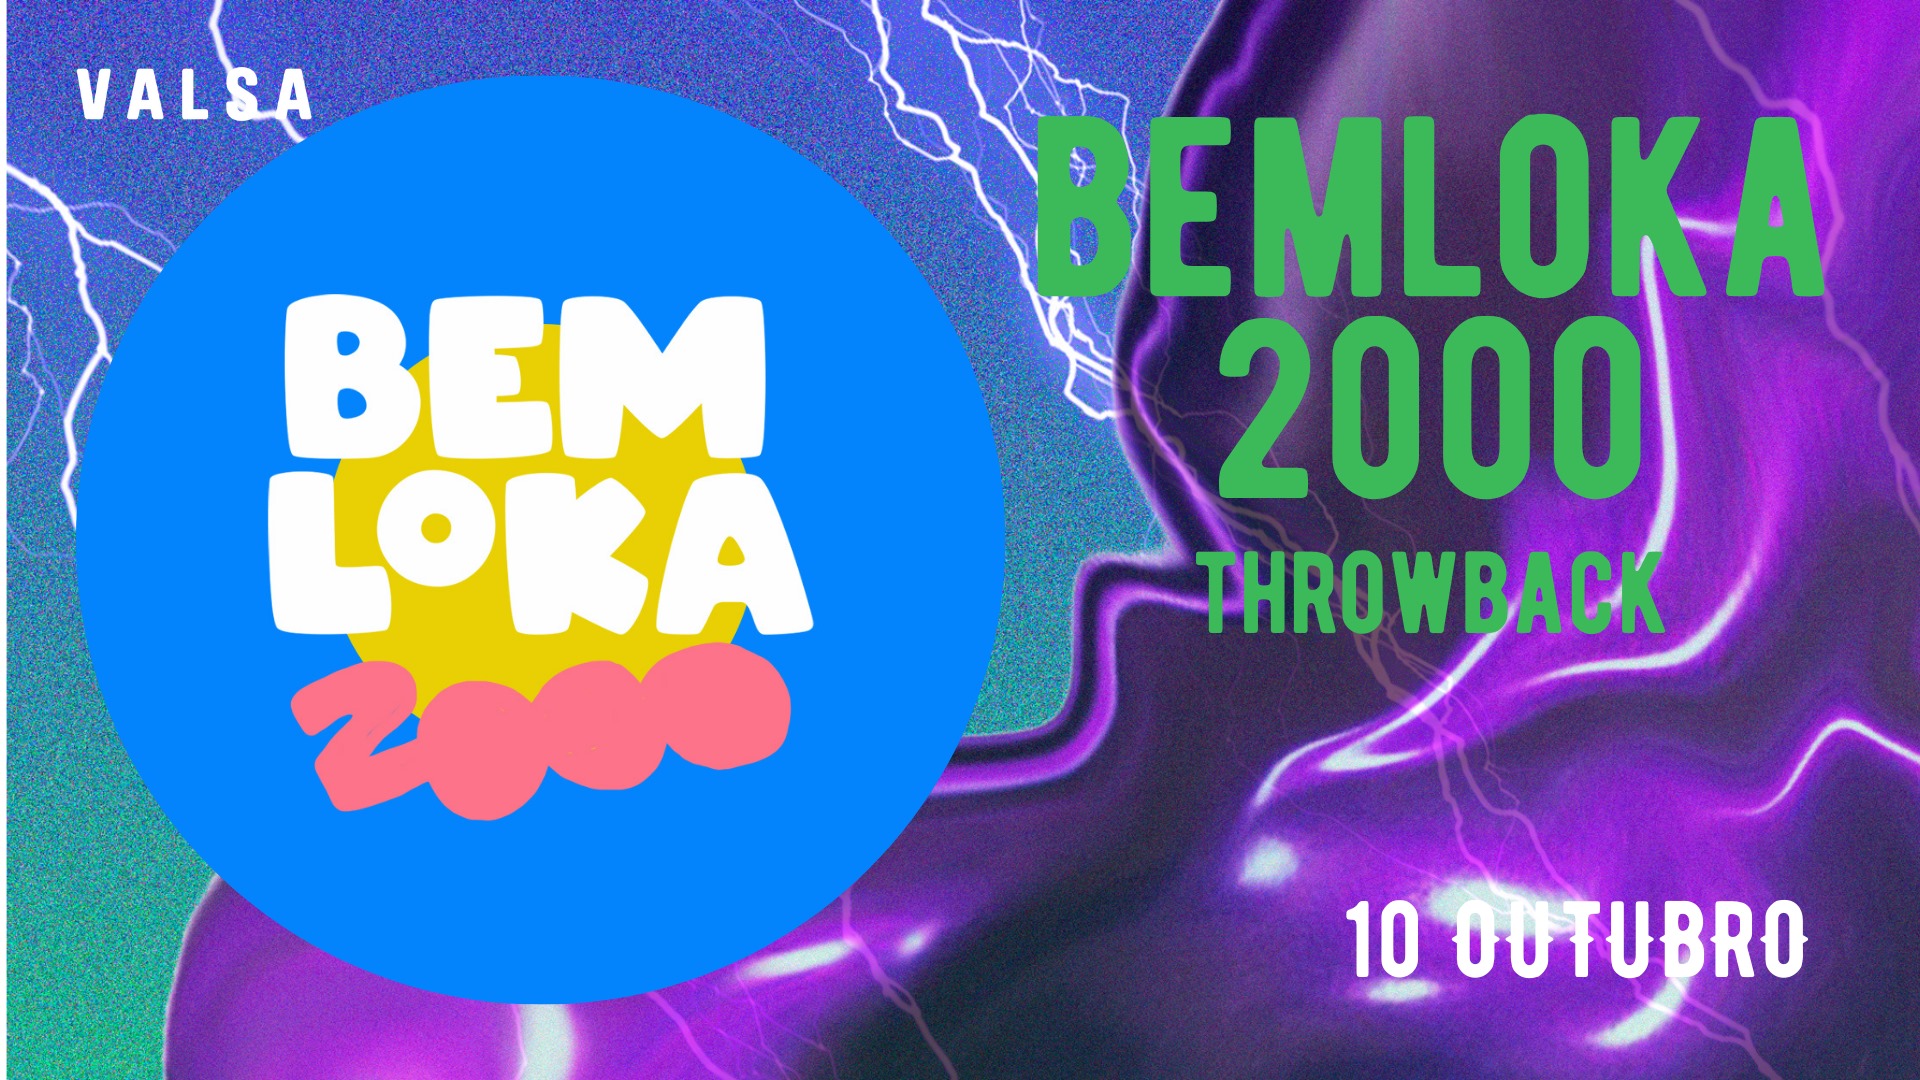 BEMLOKA 2000 | throwback